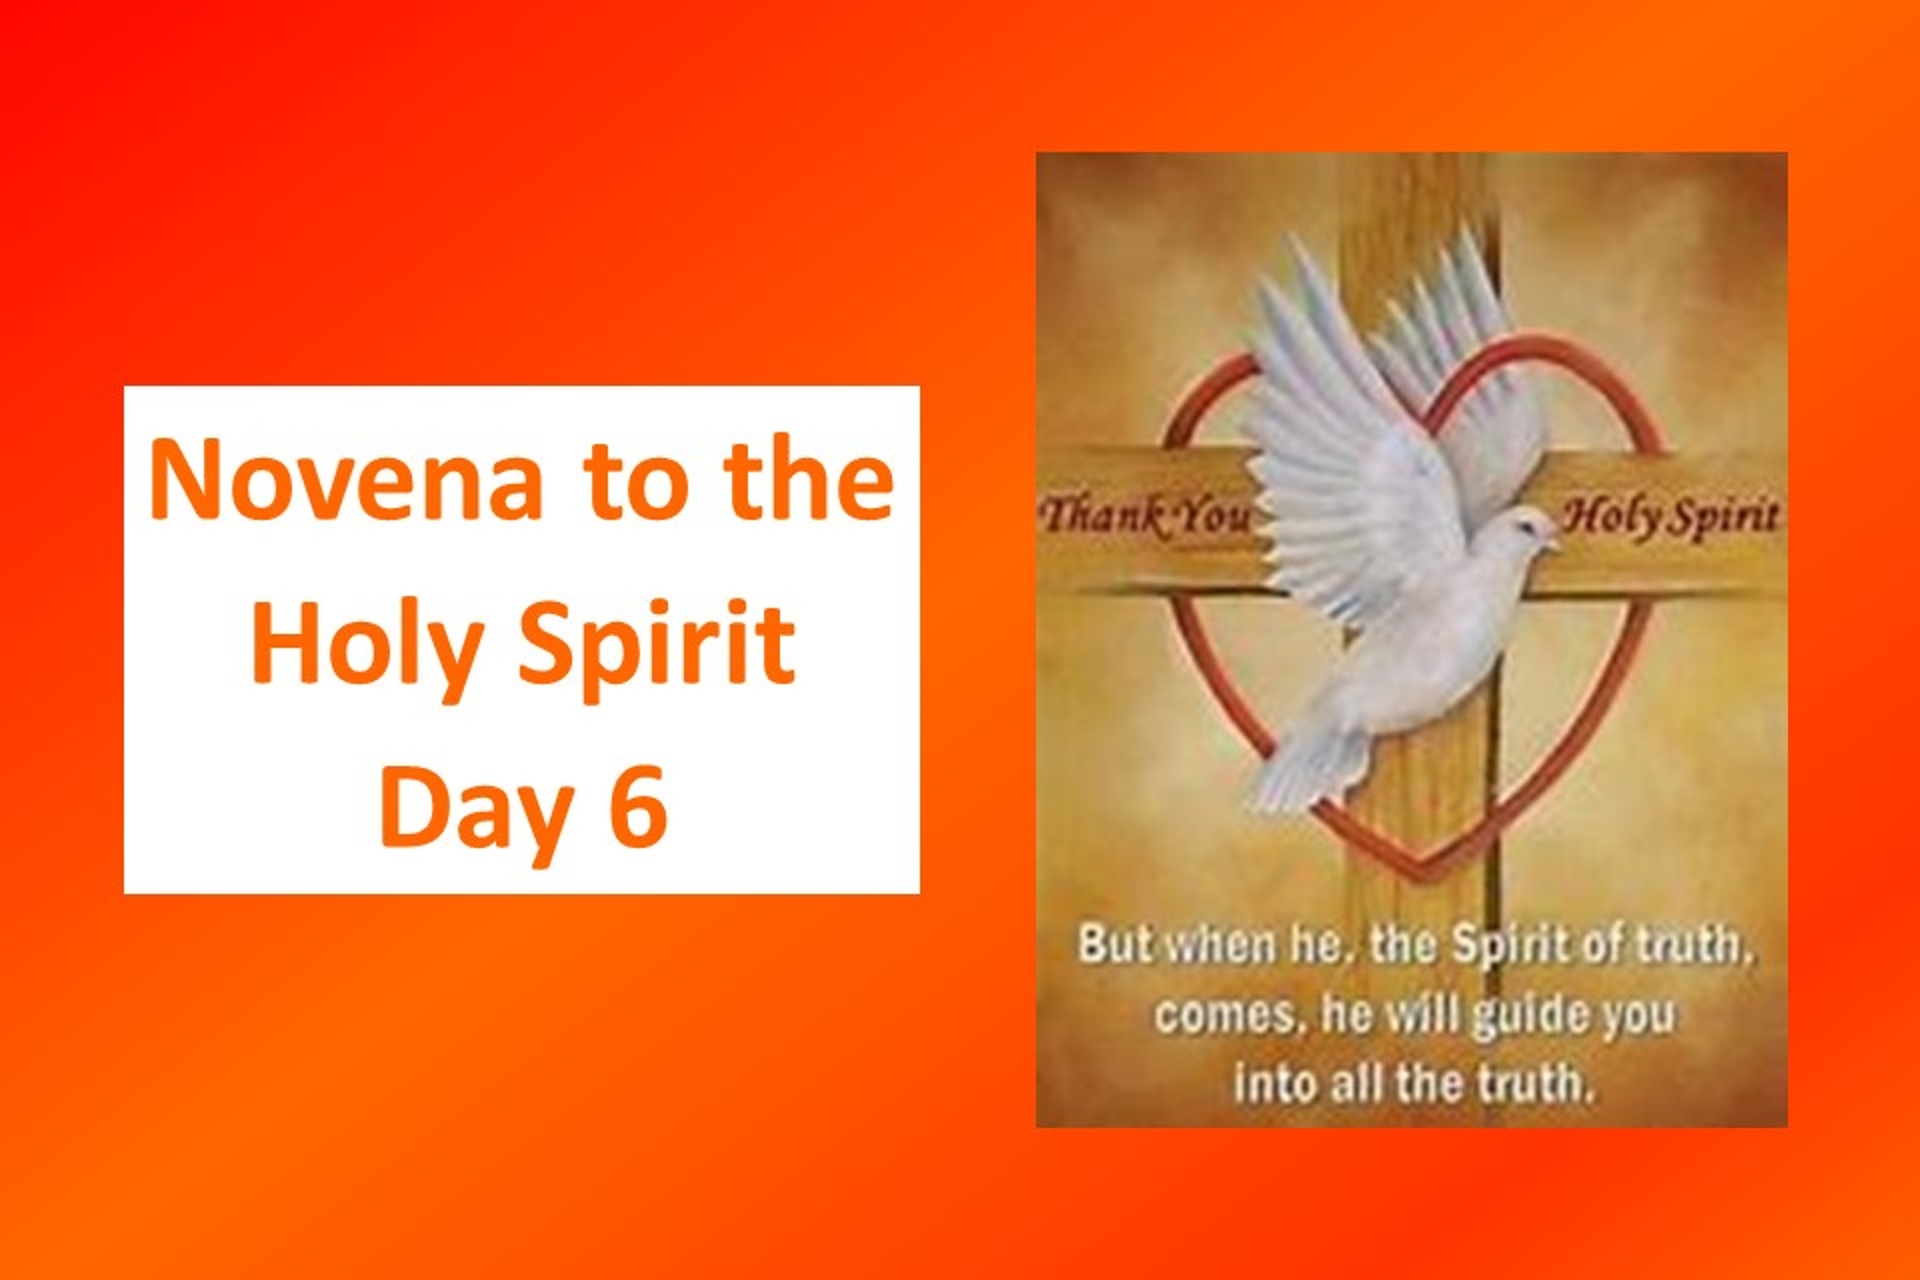 Novena to the Holy Spirit - Day 6